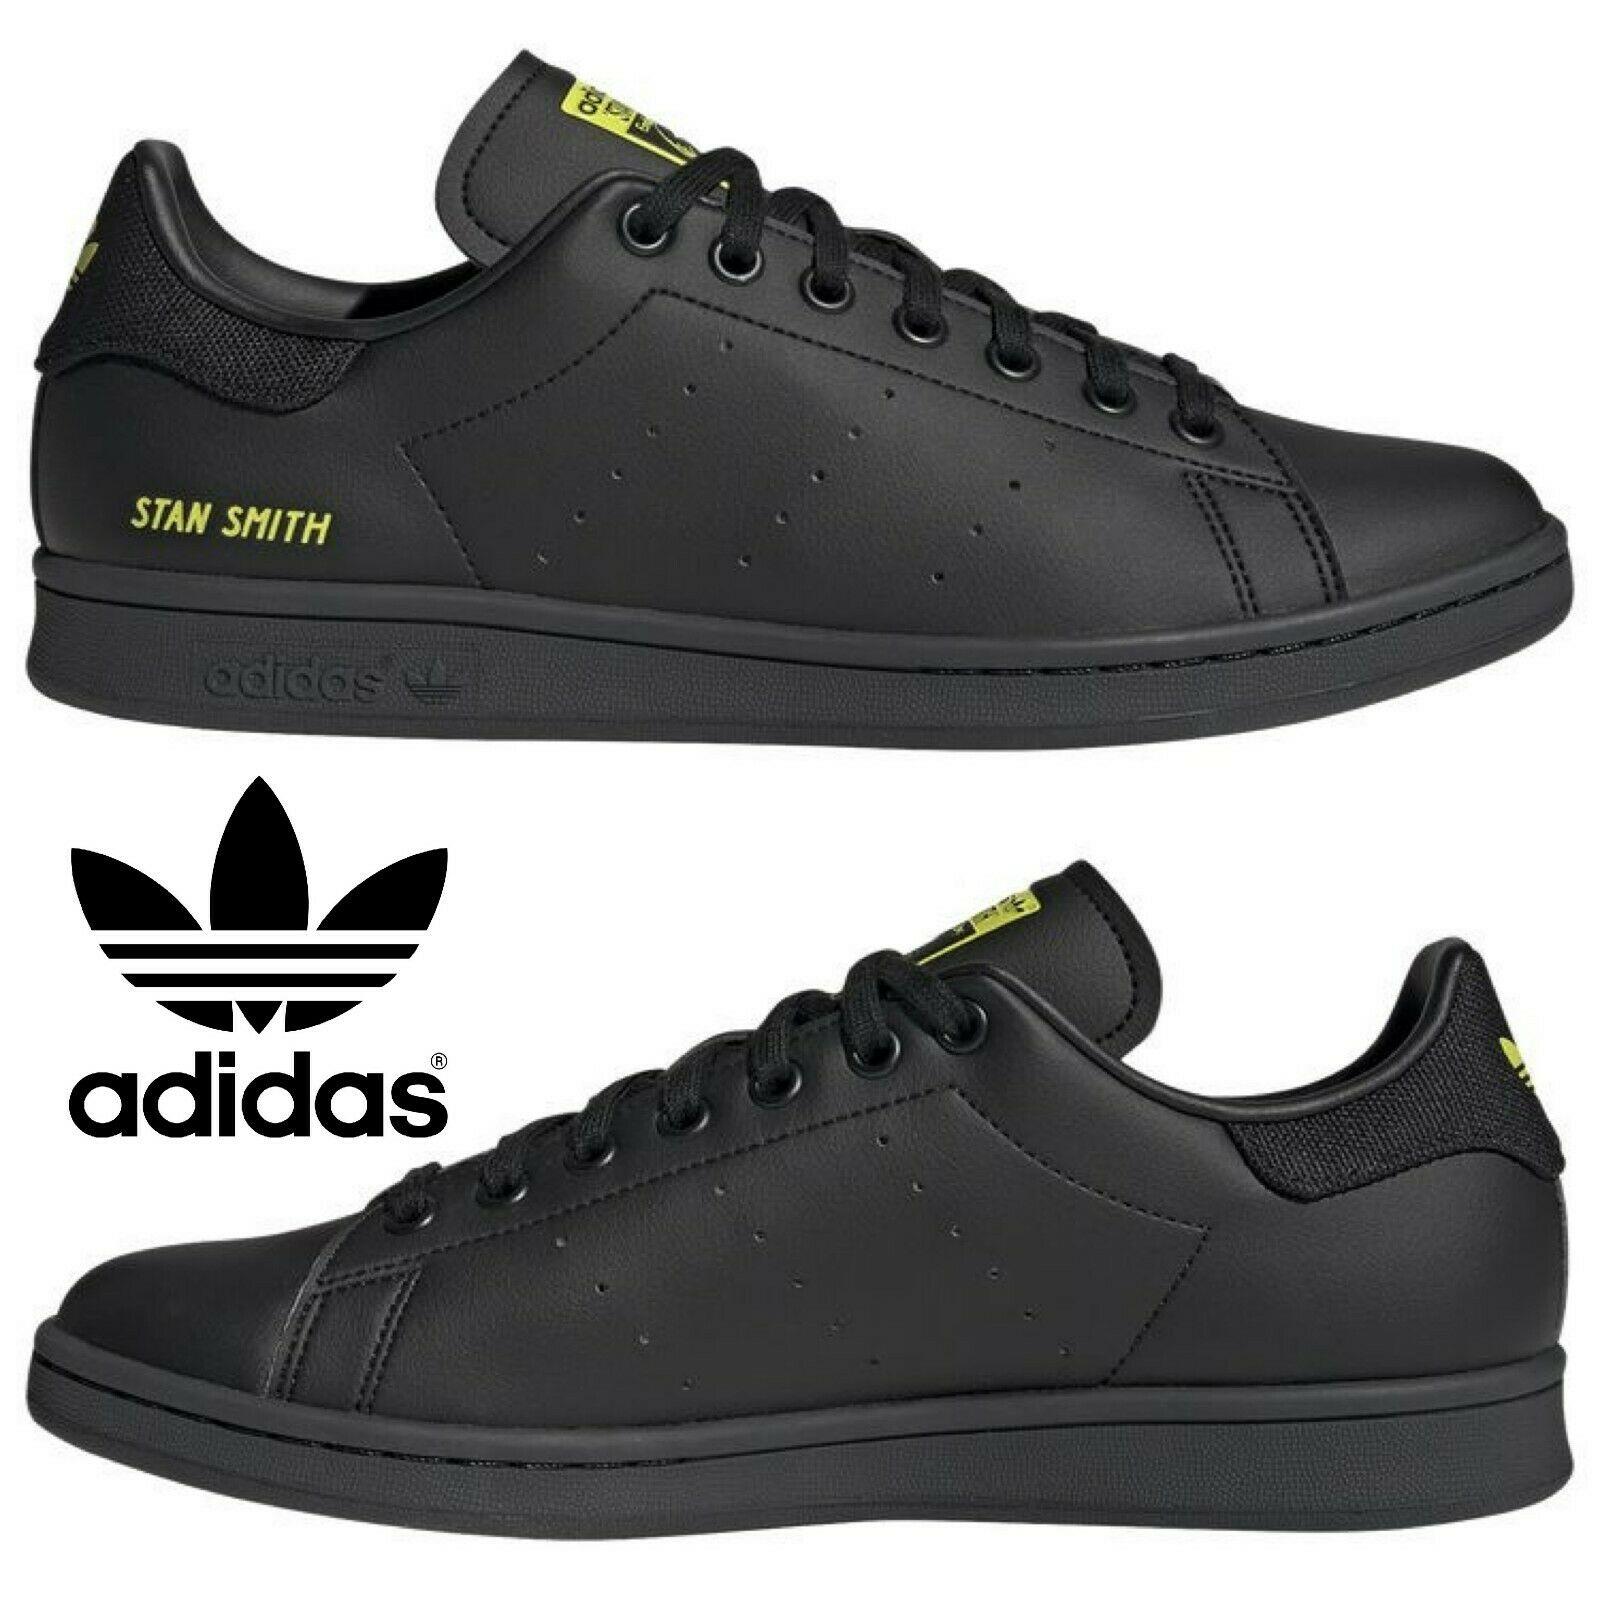 Adidas Originals Stan Smith Winterized Men`s Sneakers Comfort Sport Casual Shoes